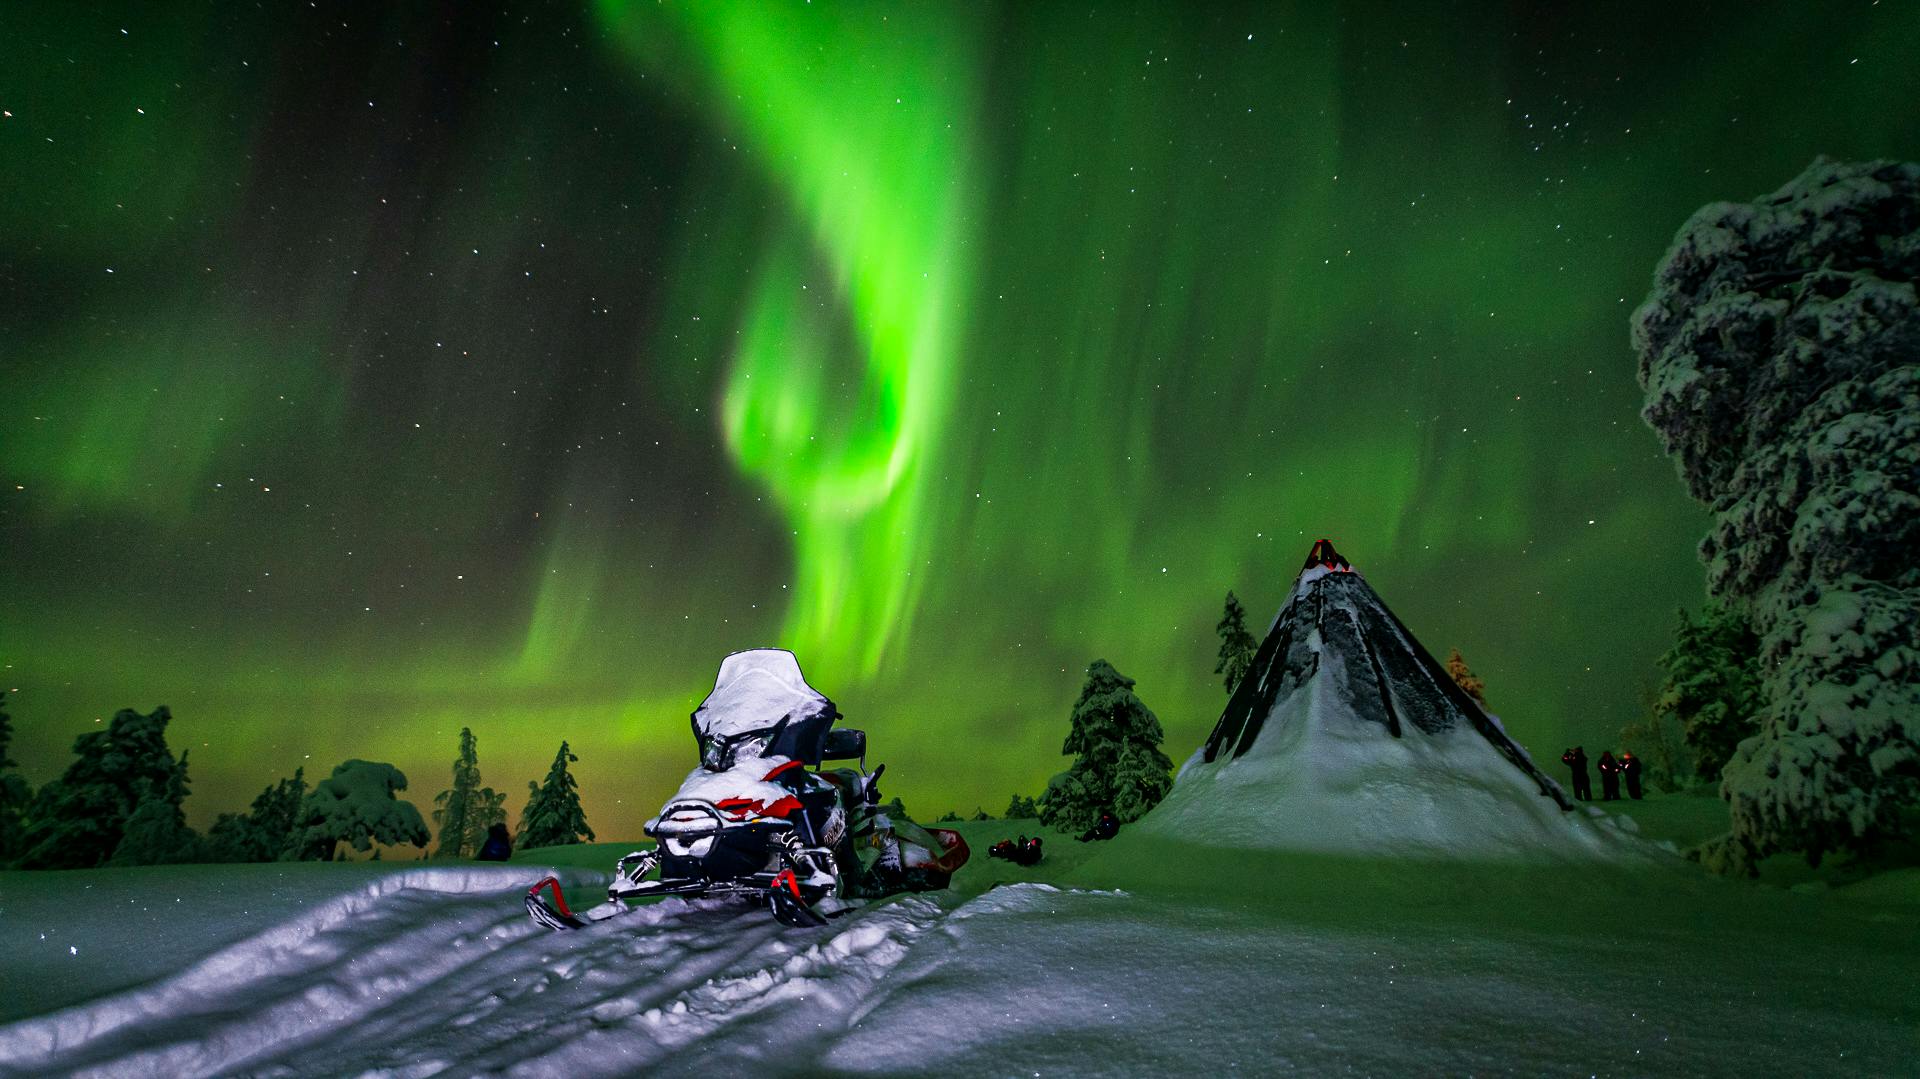 Caccia all'aurora boreale in motoslitta a Saariselka